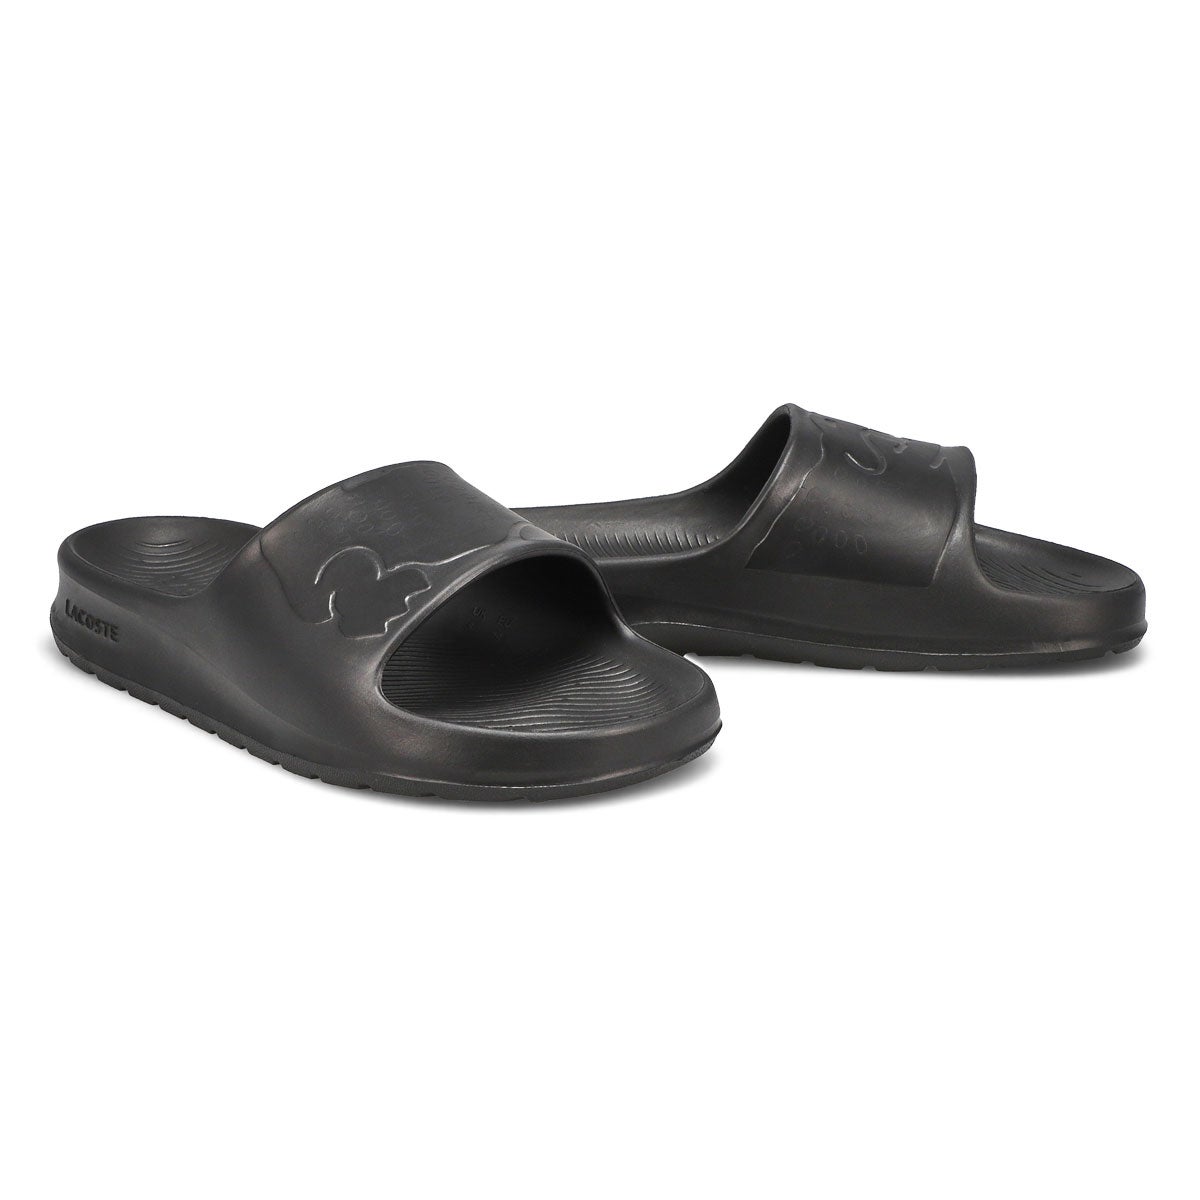 Women's Croco 2.0 Slide Sandal - Black/Black